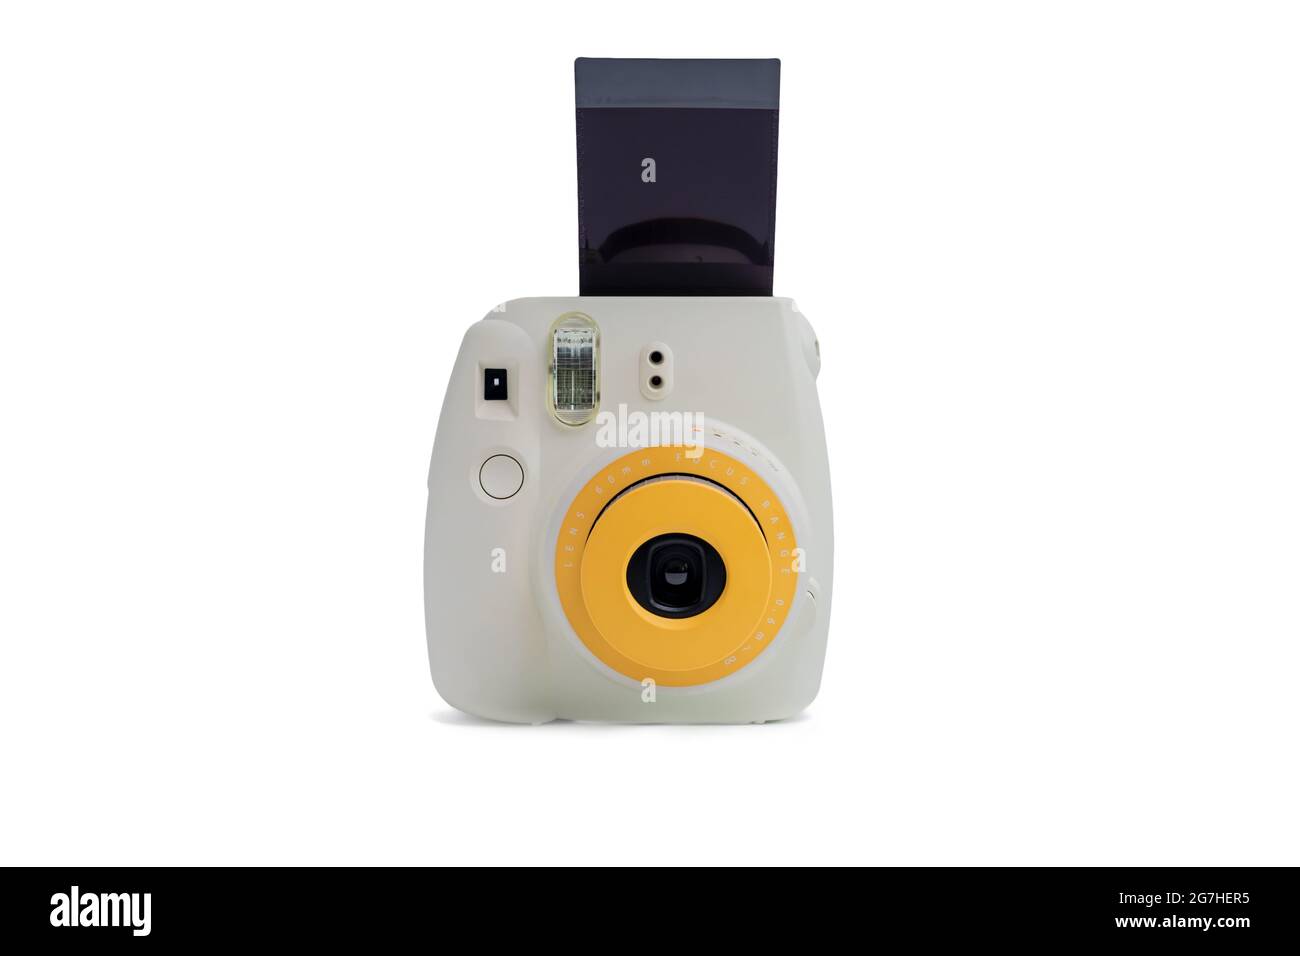 polaroid camera, film camera with photo film on white background Stock Photo